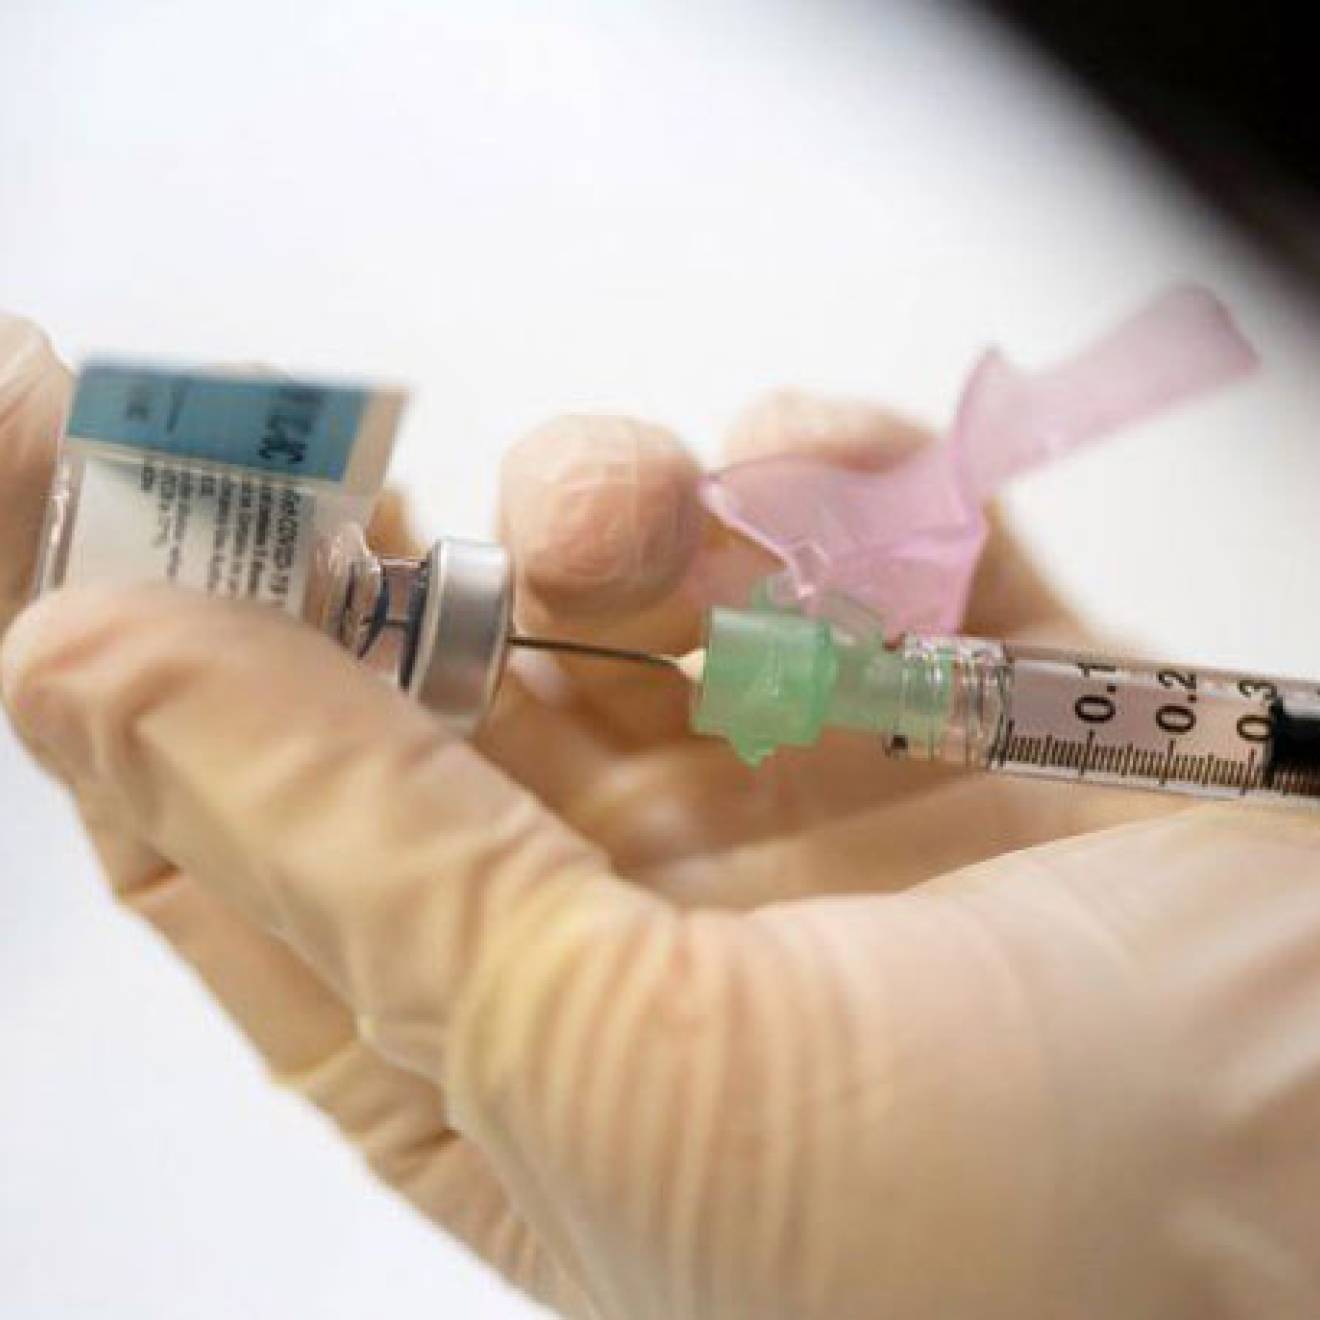 Vaccine syringe by Susan Merrell